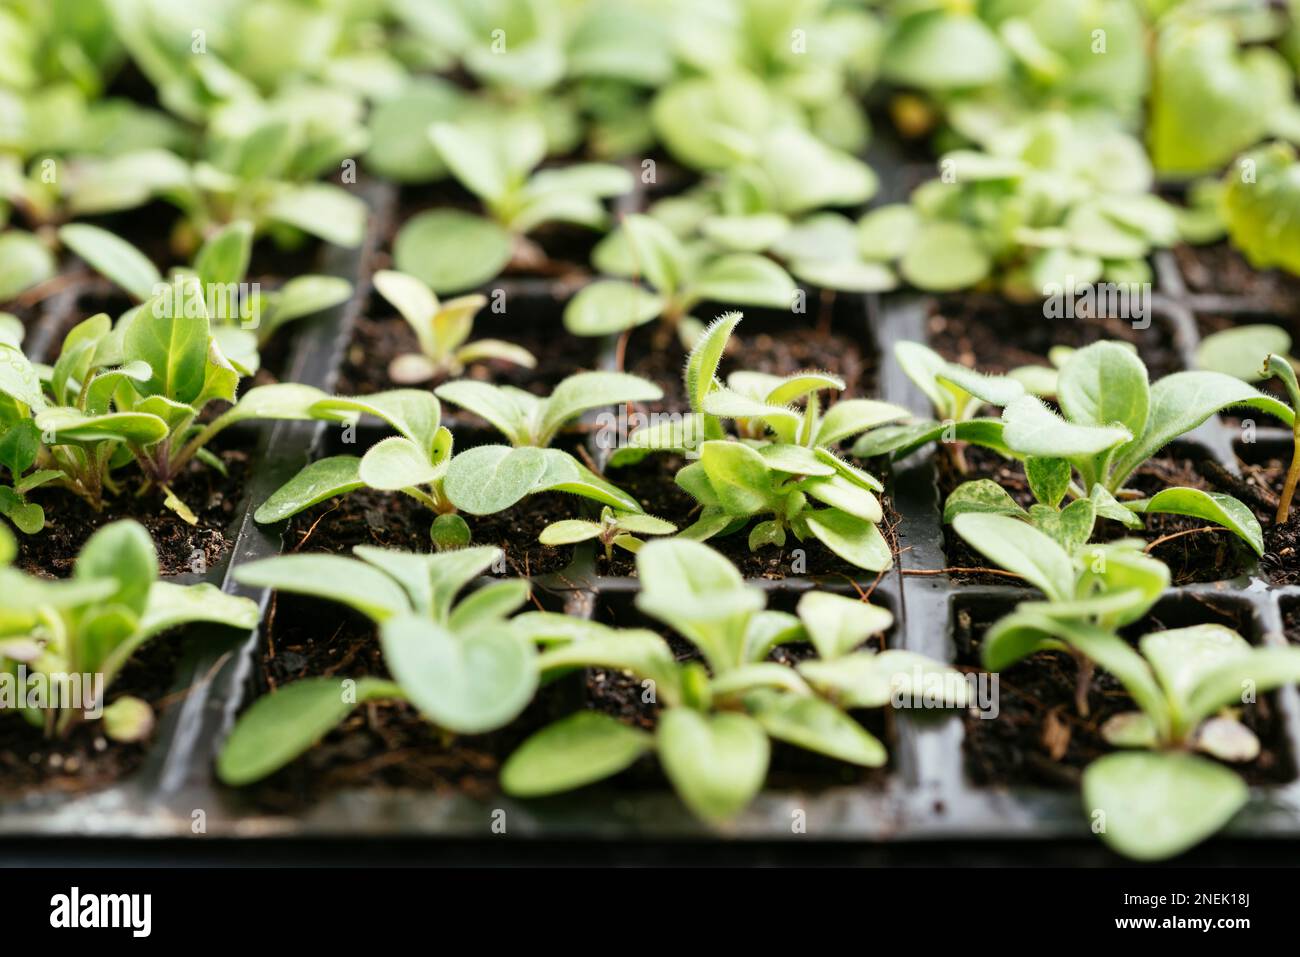 Garden petunia (Petunia x hybrida) seedlings in a seeding tray. Stock Photo